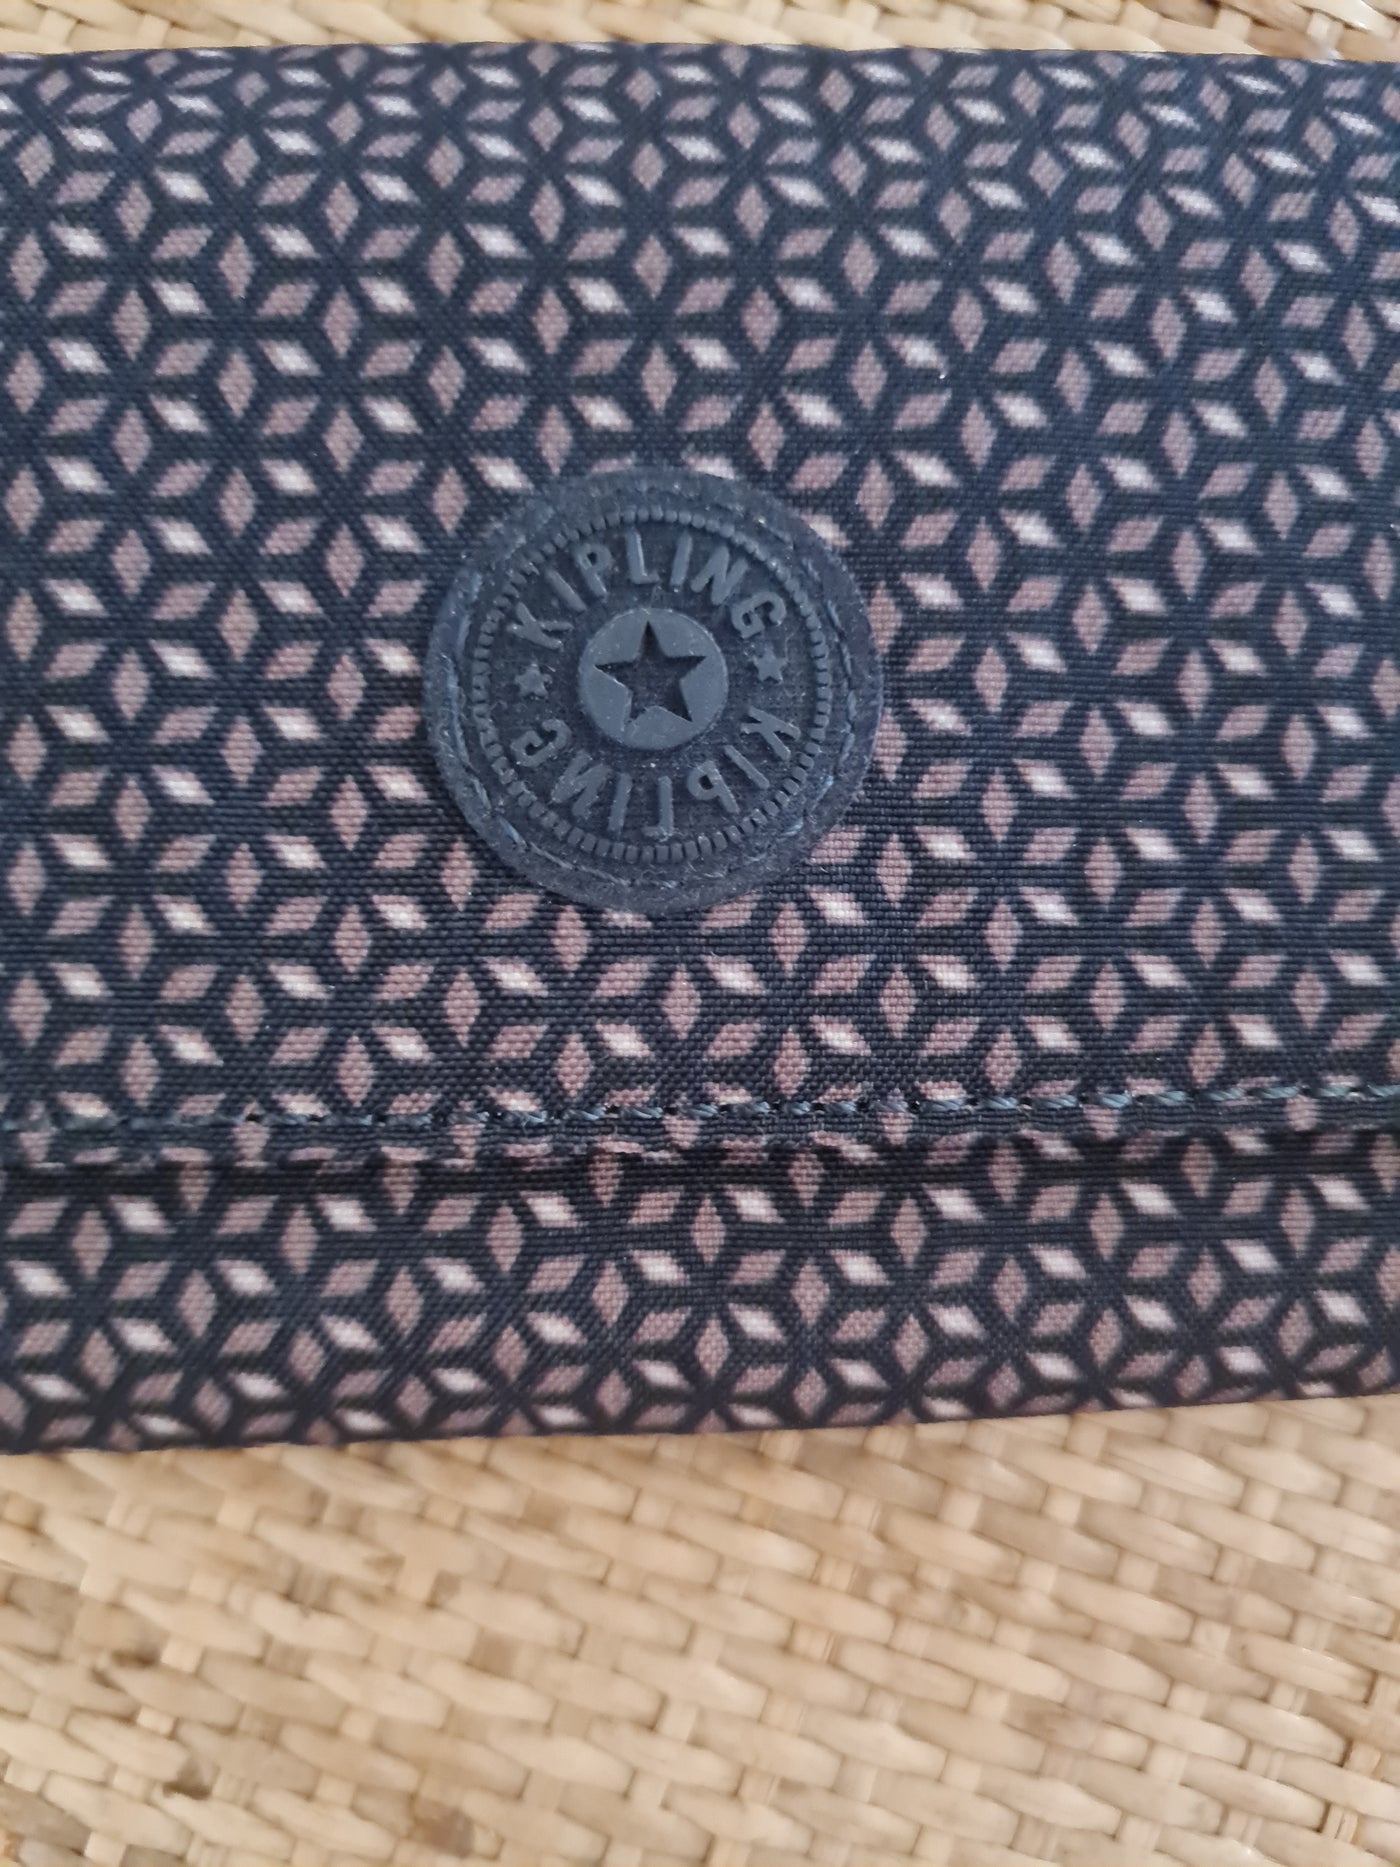 Kipling patterned wallet